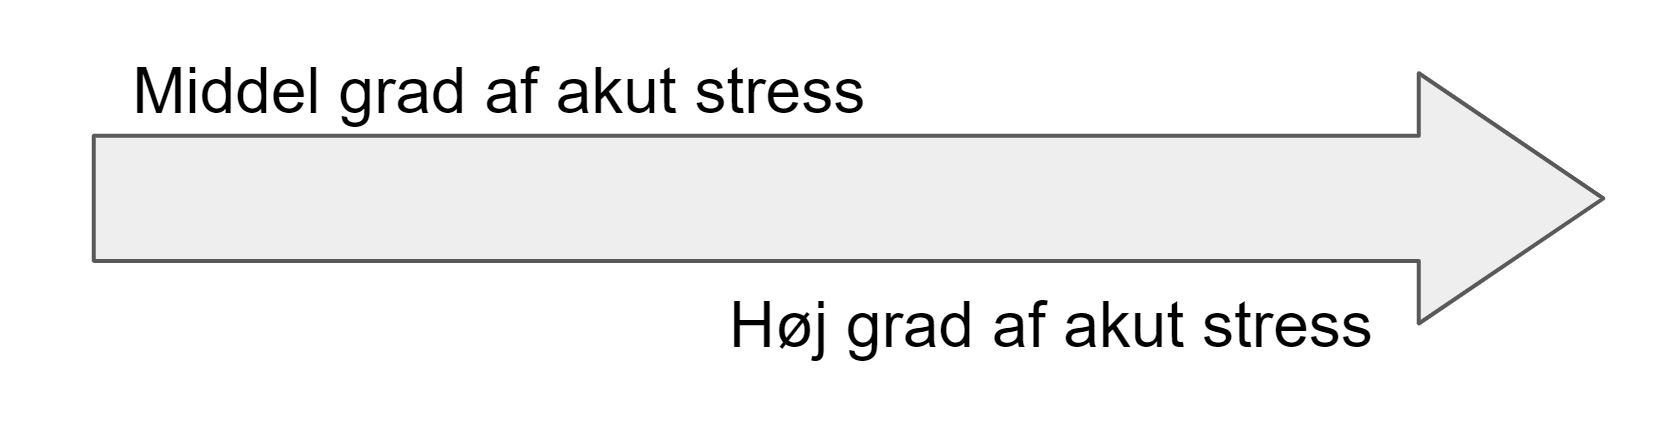 tegn på stress - akut stress intensitet